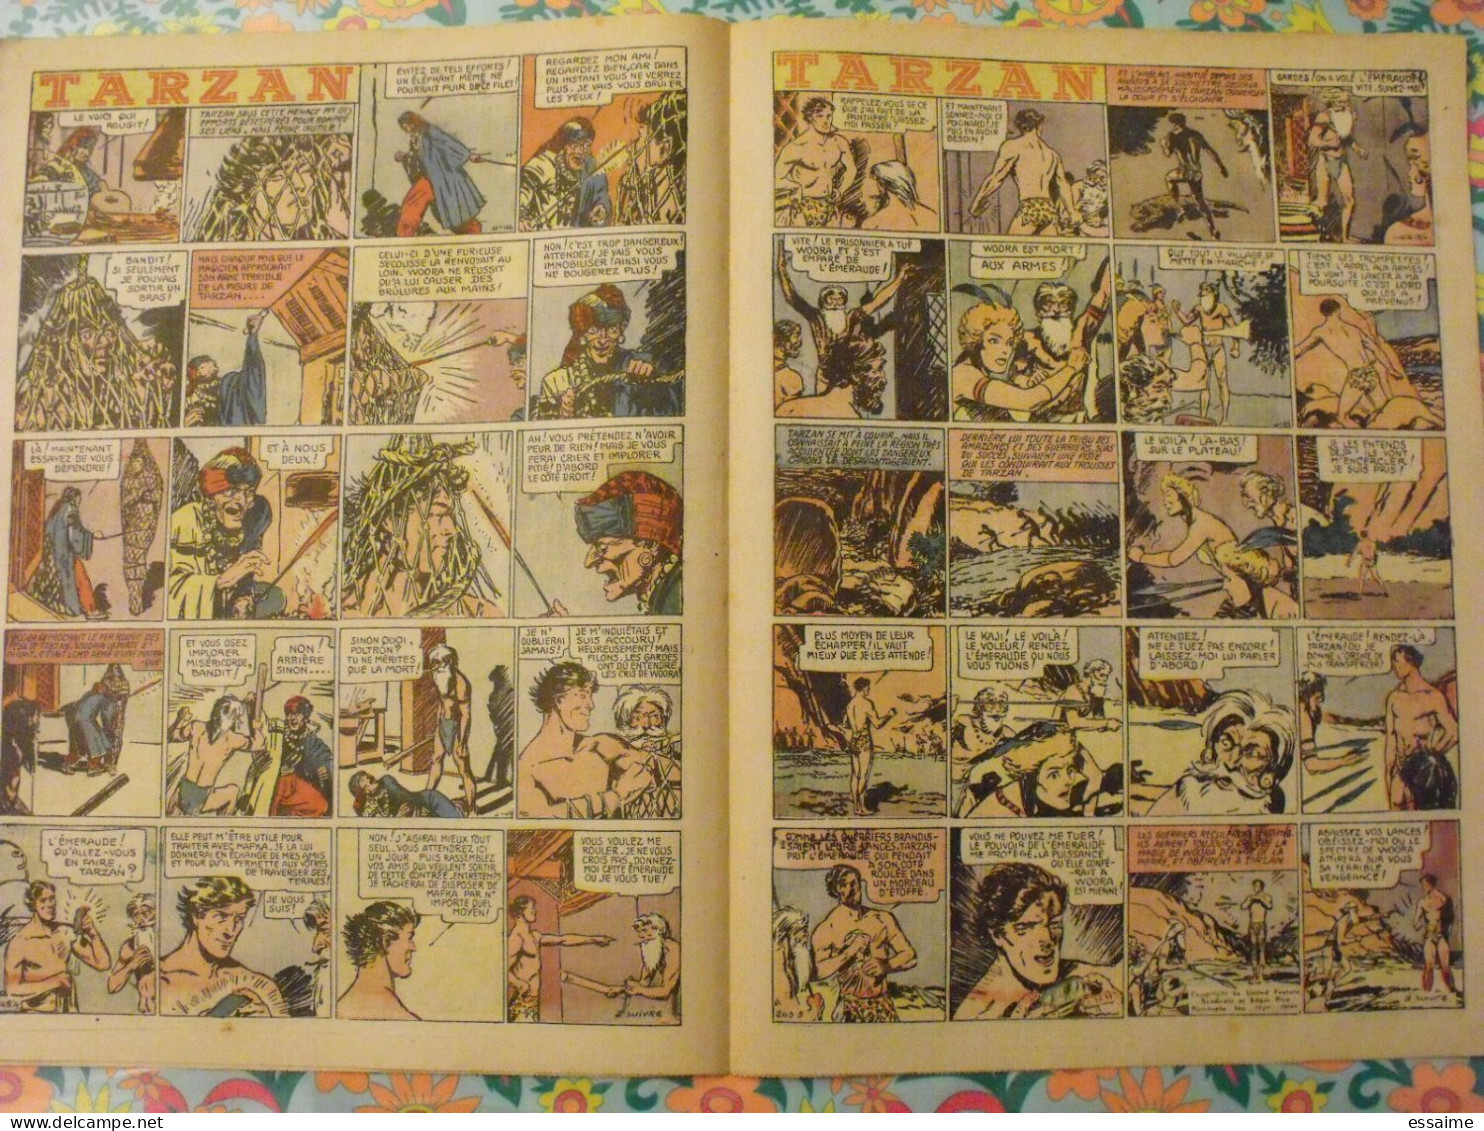 5 n° de Hurrah ! de 1940. Brick Bradford, Tarzan, le roi de la police montée, gordon. A redécouvrir